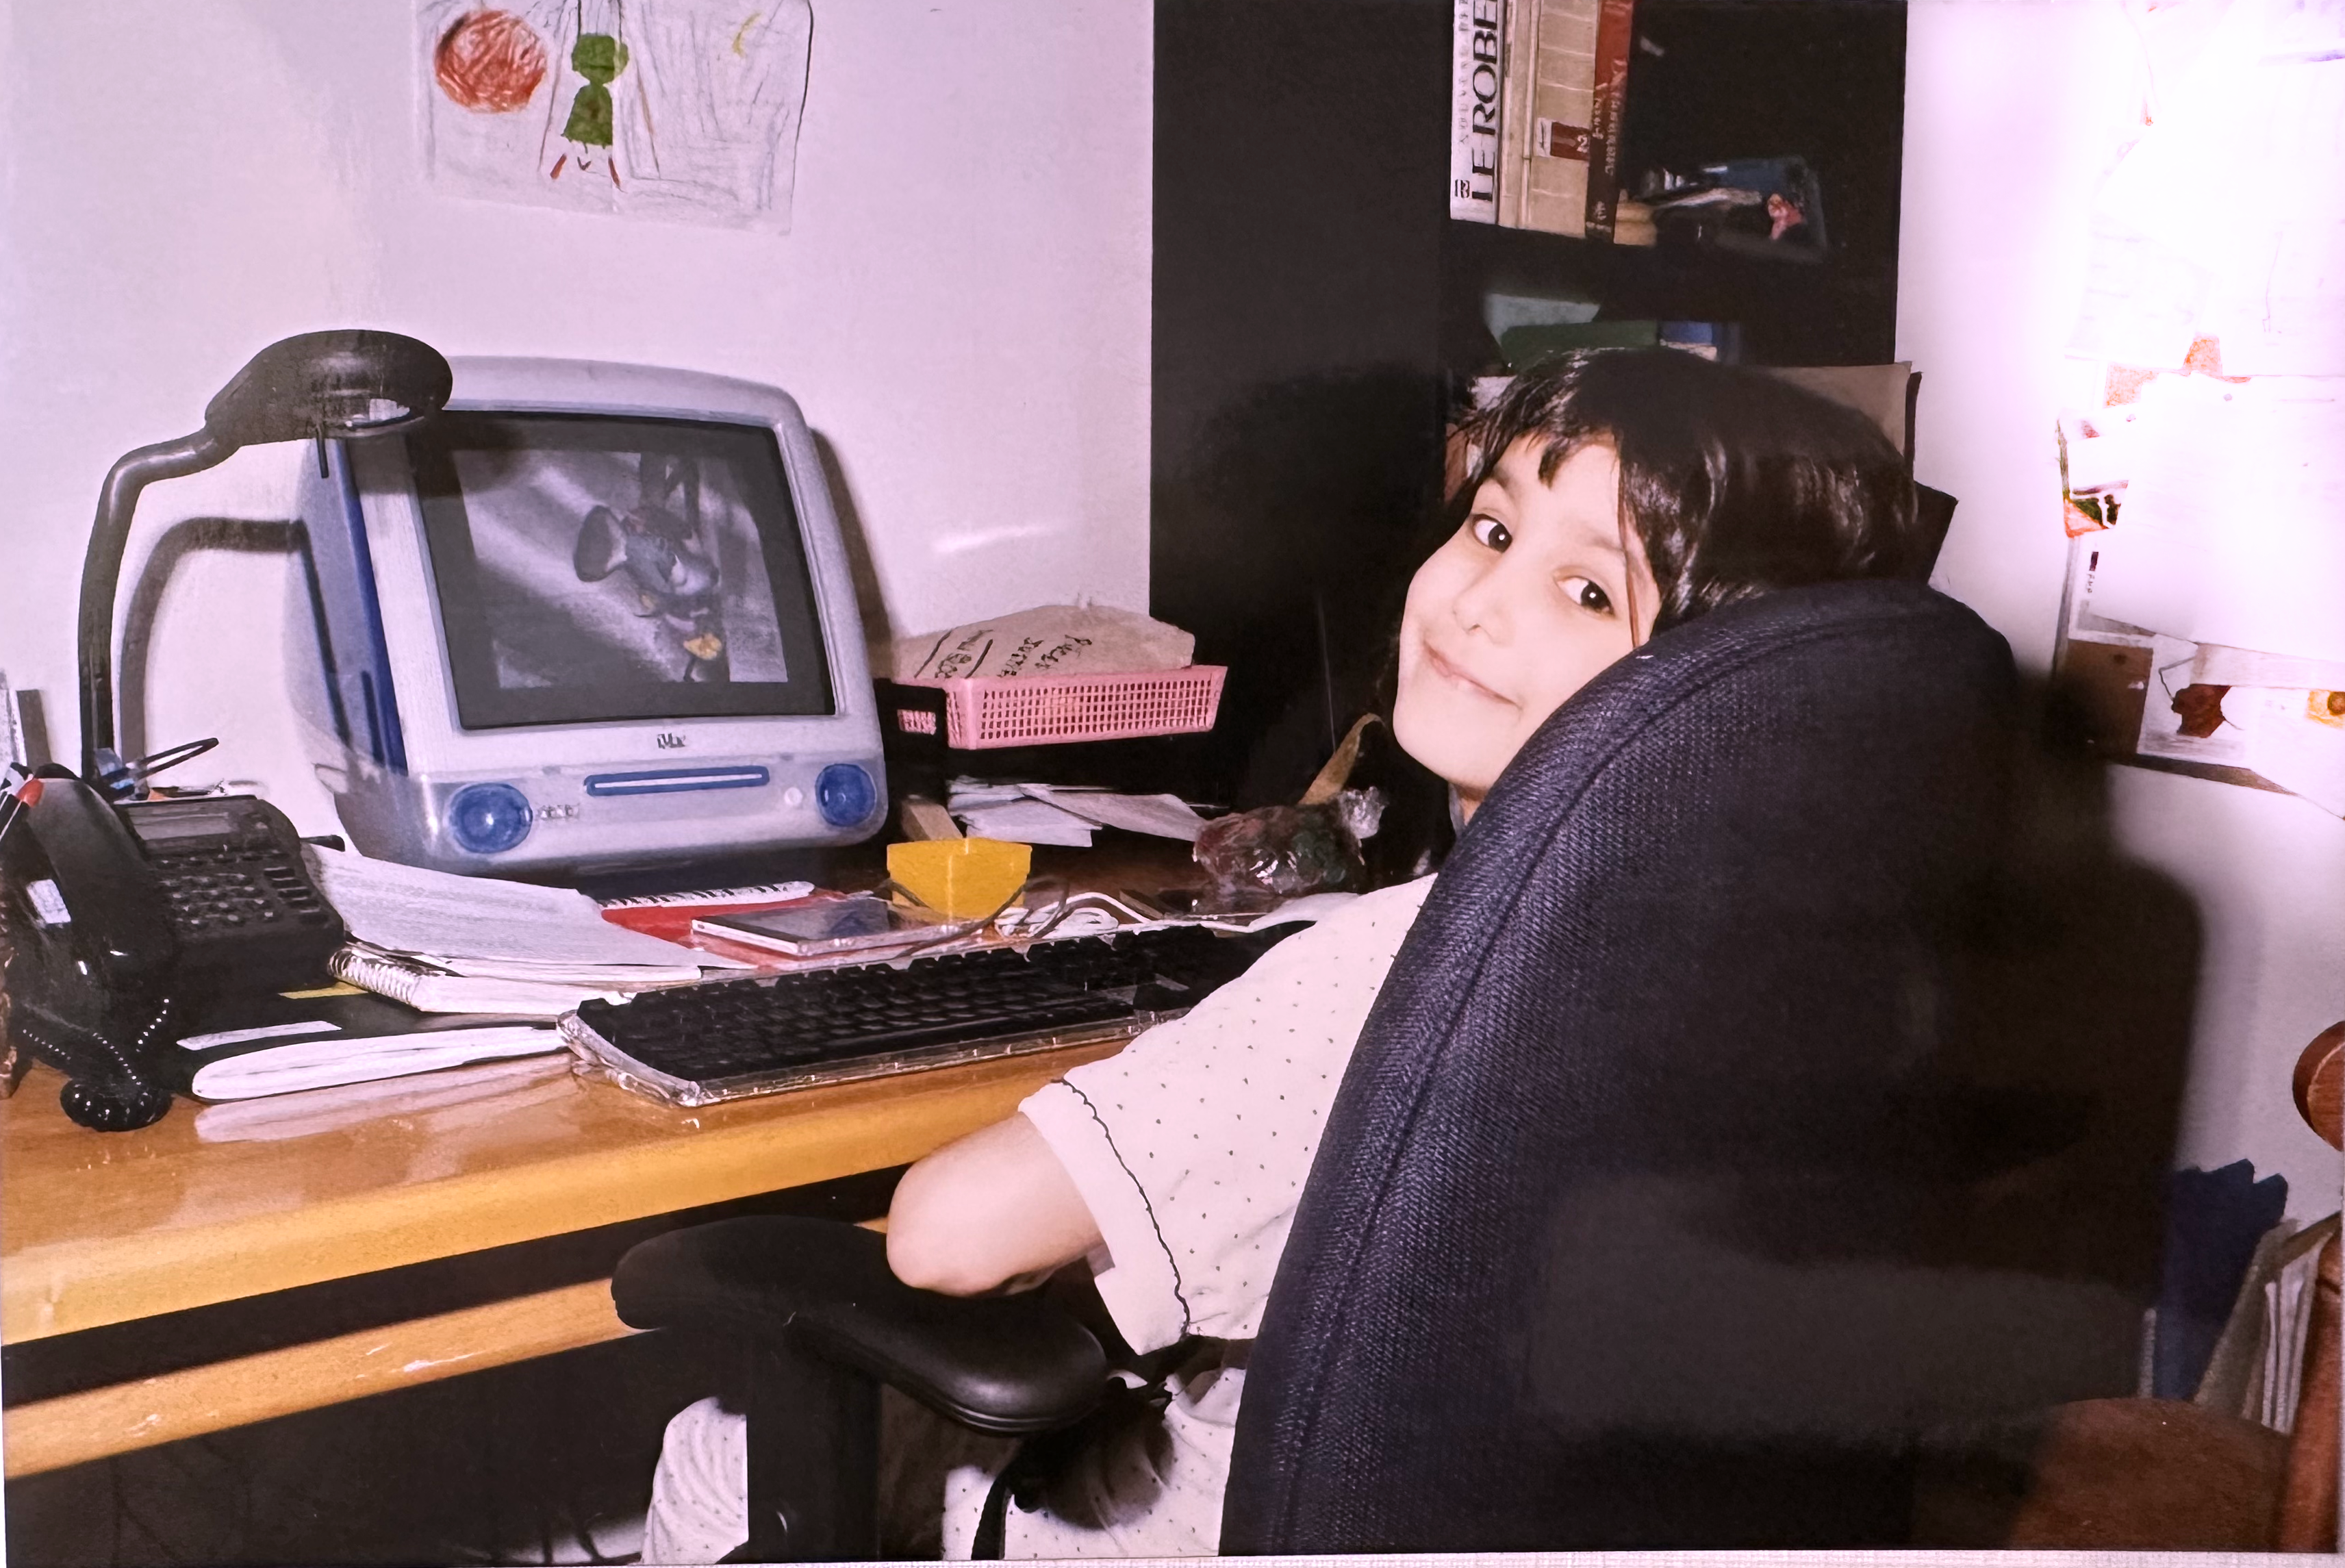 Alyssa sitting in front of her Apple Macintosh iMac G3 computer in the colour Indigo.